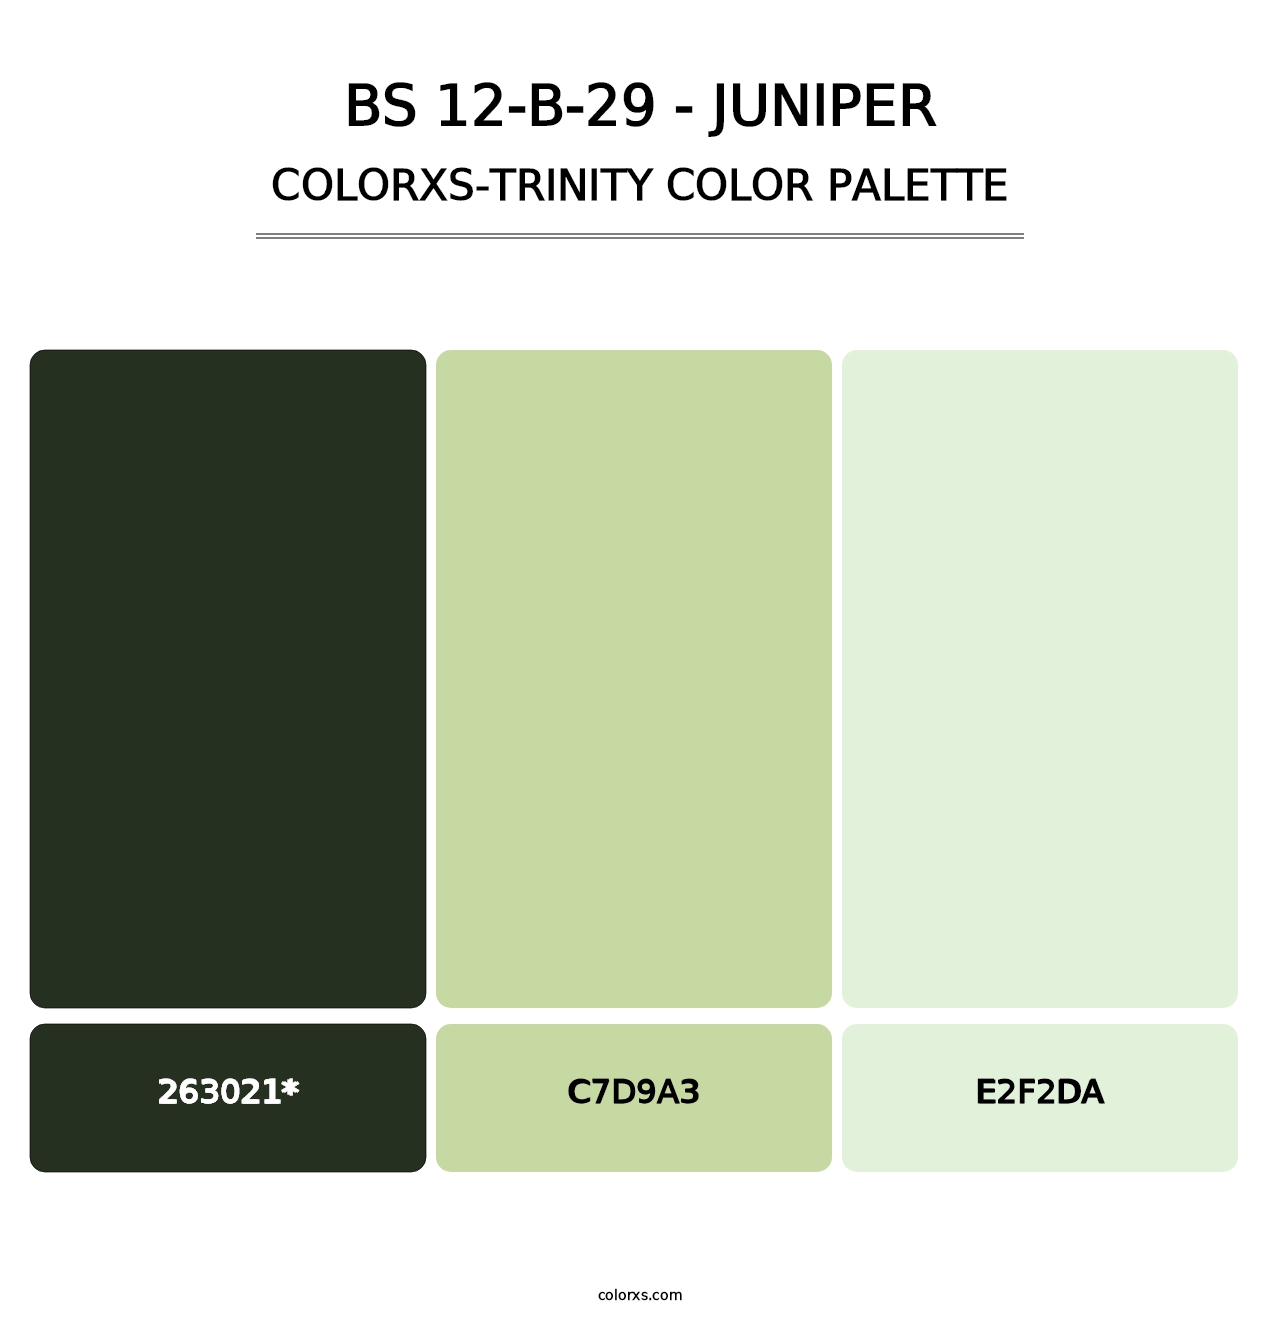 BS 12-B-29 - Juniper - Colorxs Trinity Palette